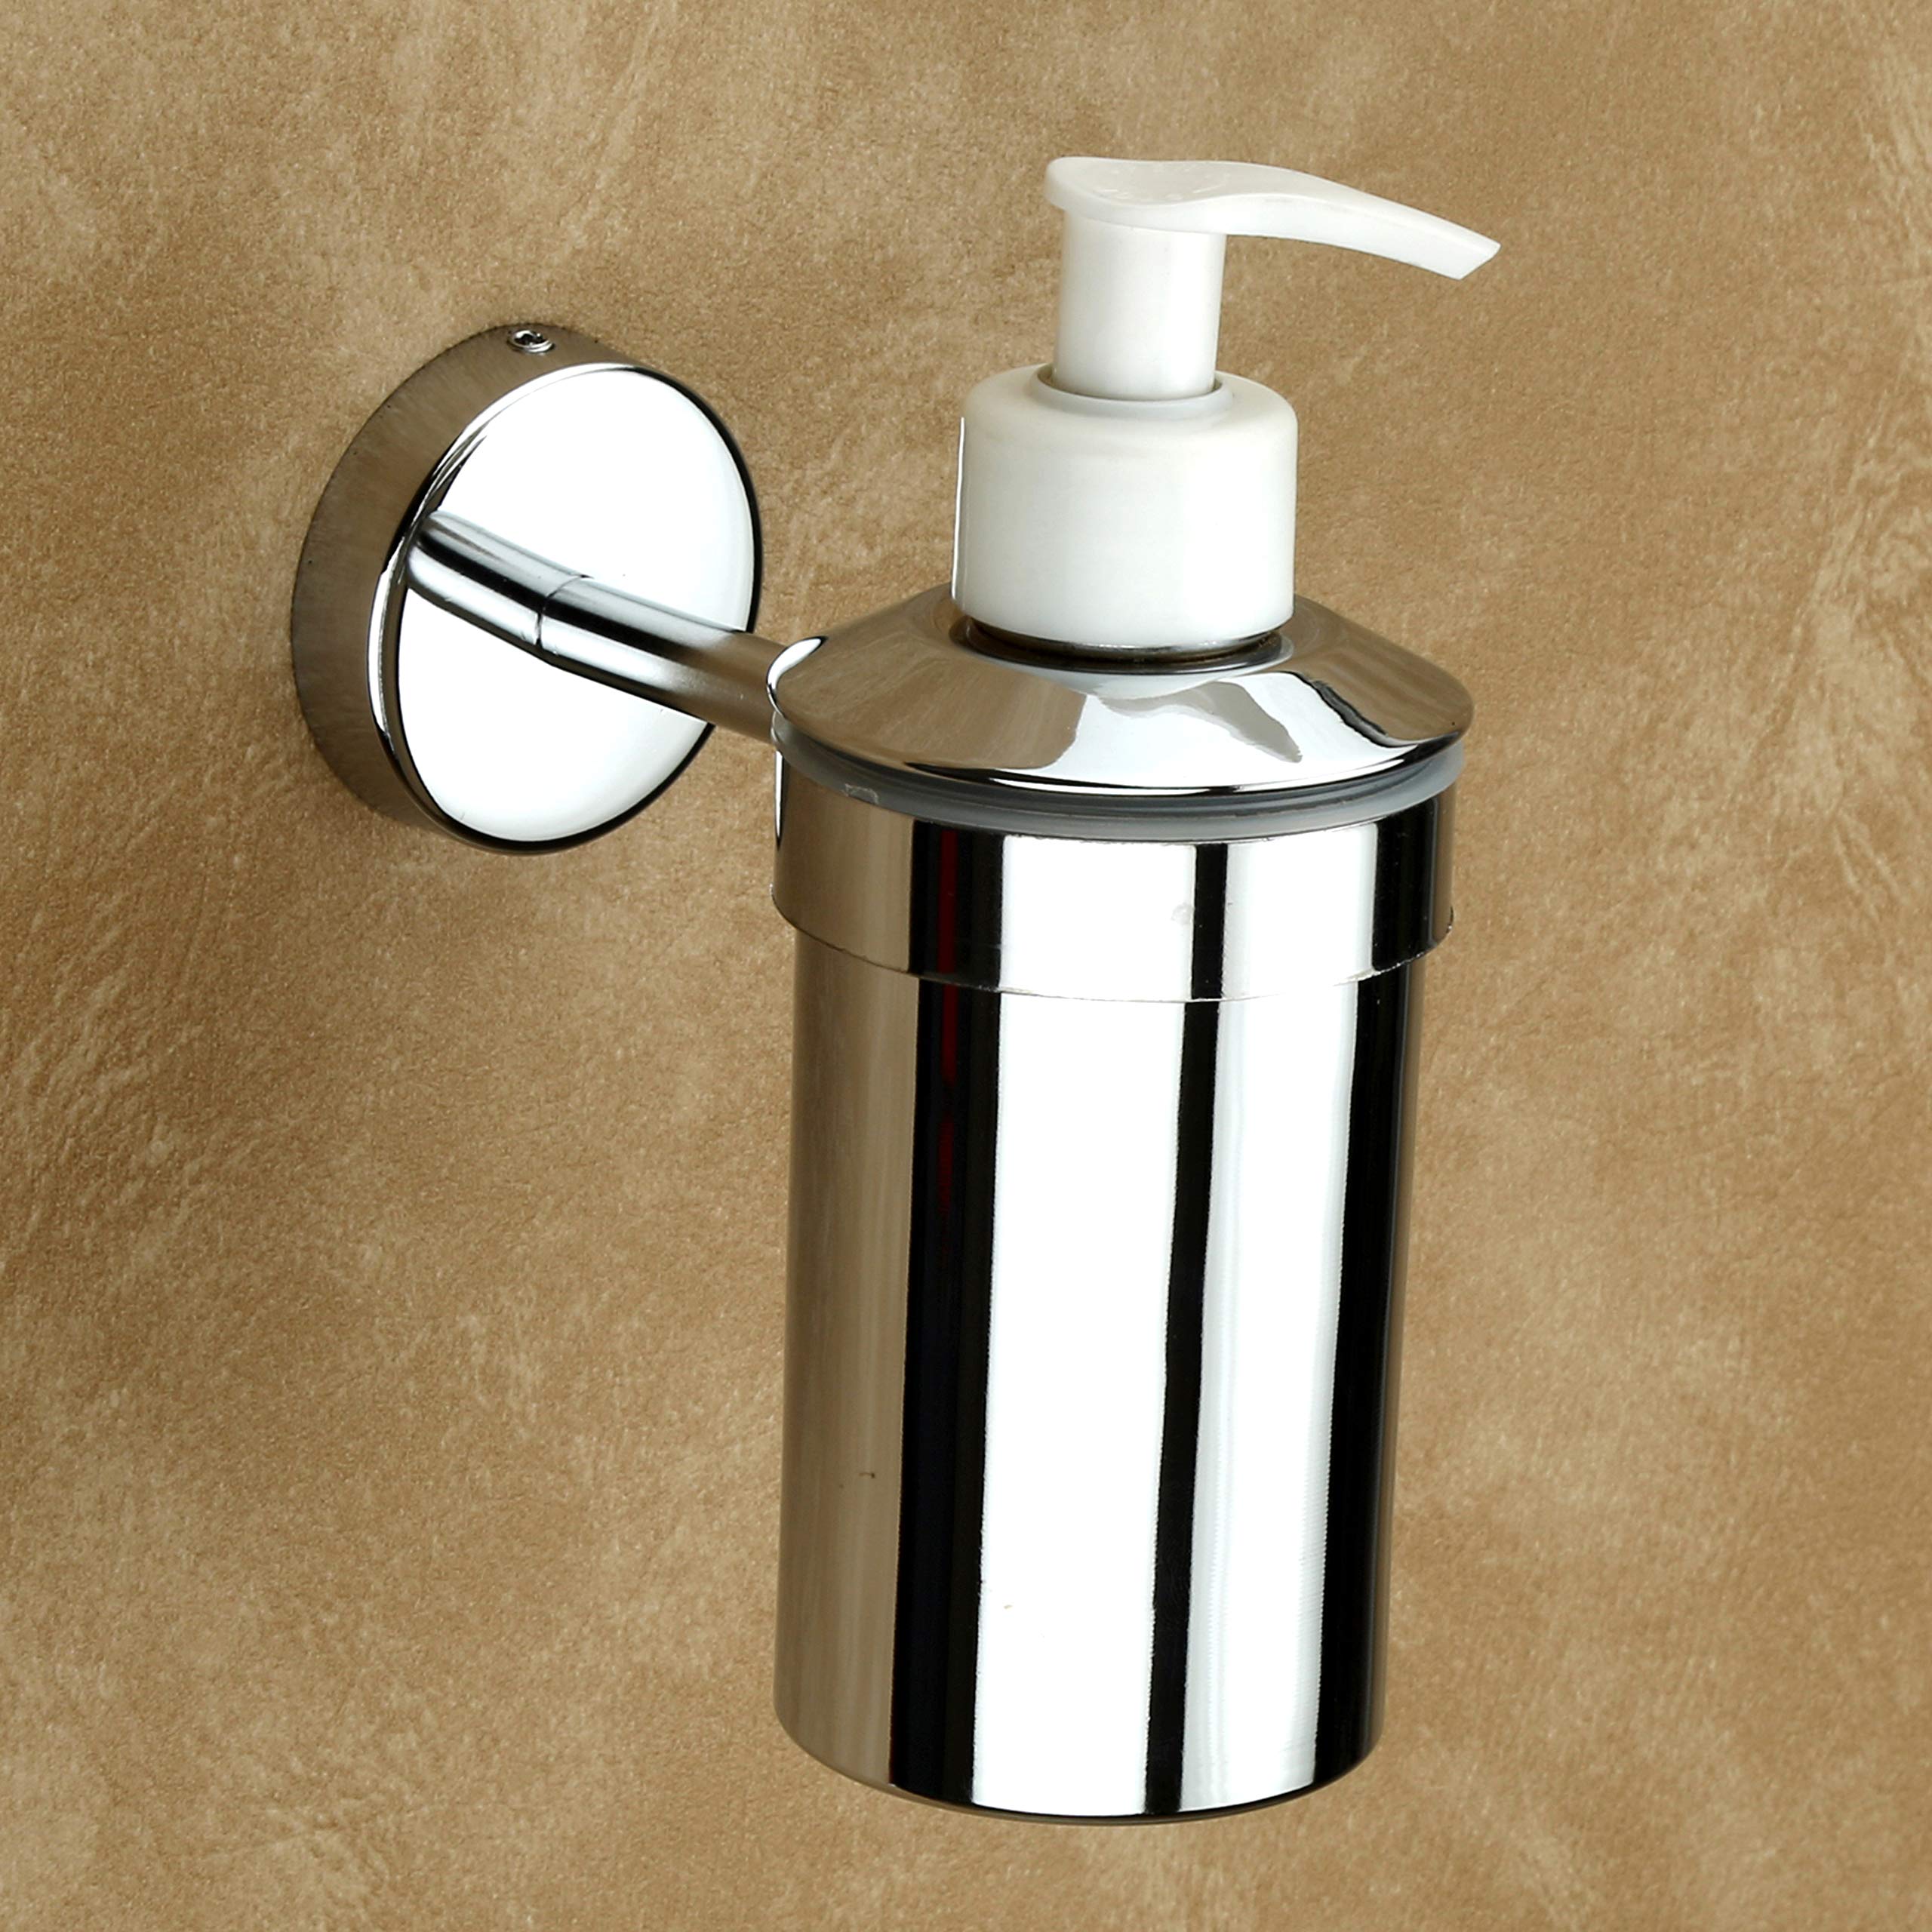 Plantex Brezza Stainless Steel Liquid Soap Dispenser/Shampoo Dispenser/Hand Wash Dispenser/Bathroom Accessories - Chrome (Pack of 1)